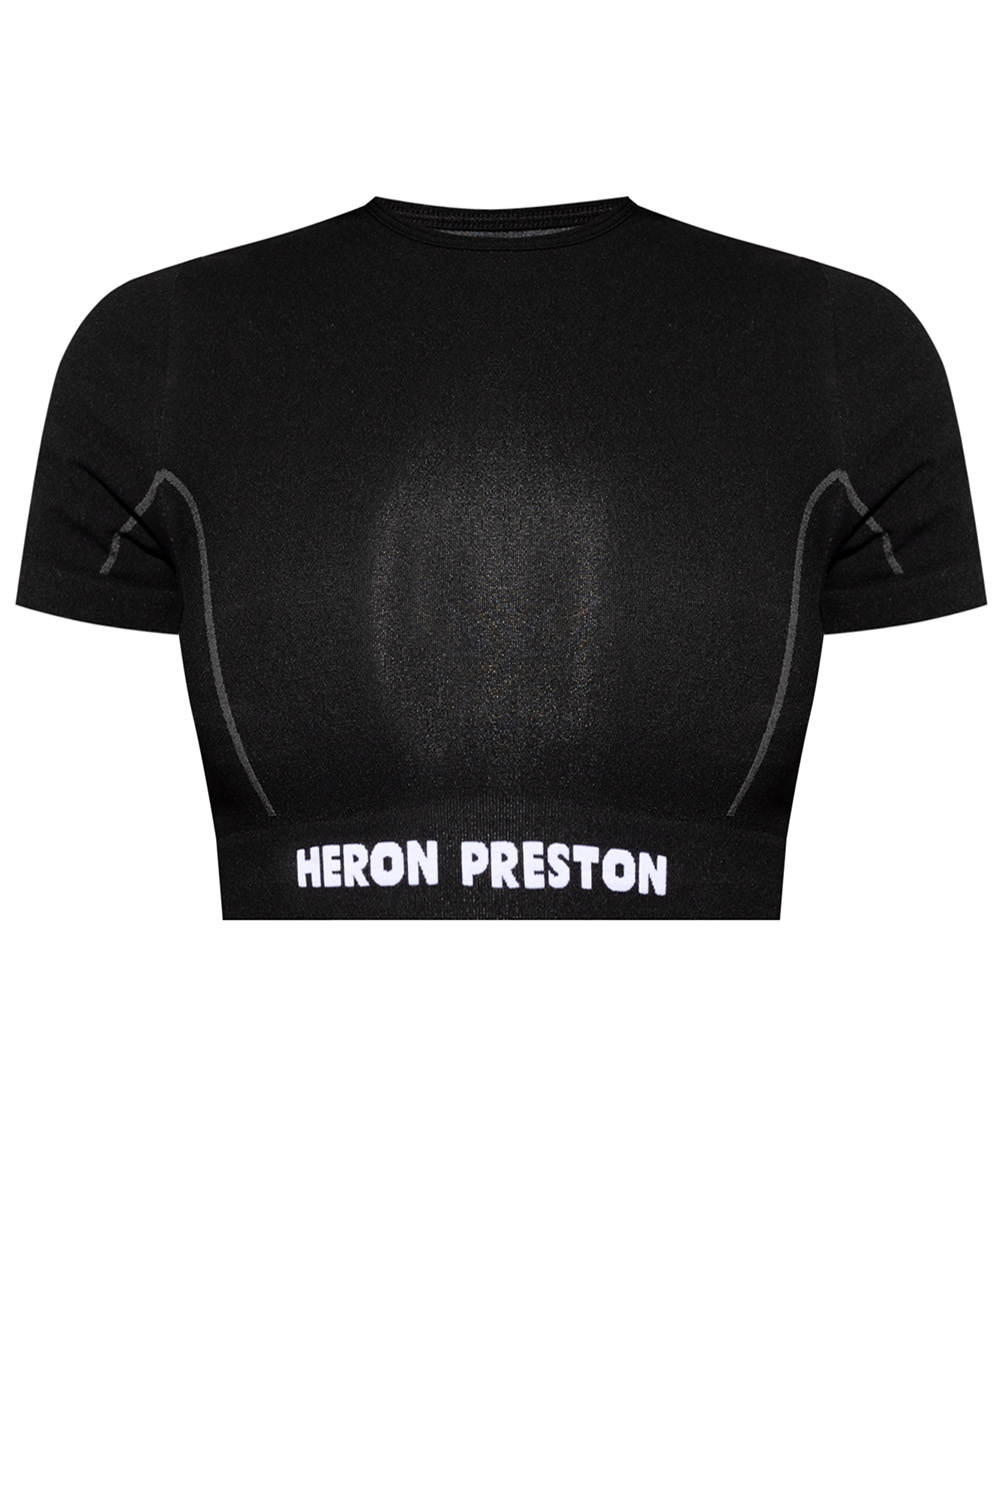 Heron Preston Short-sleeved top